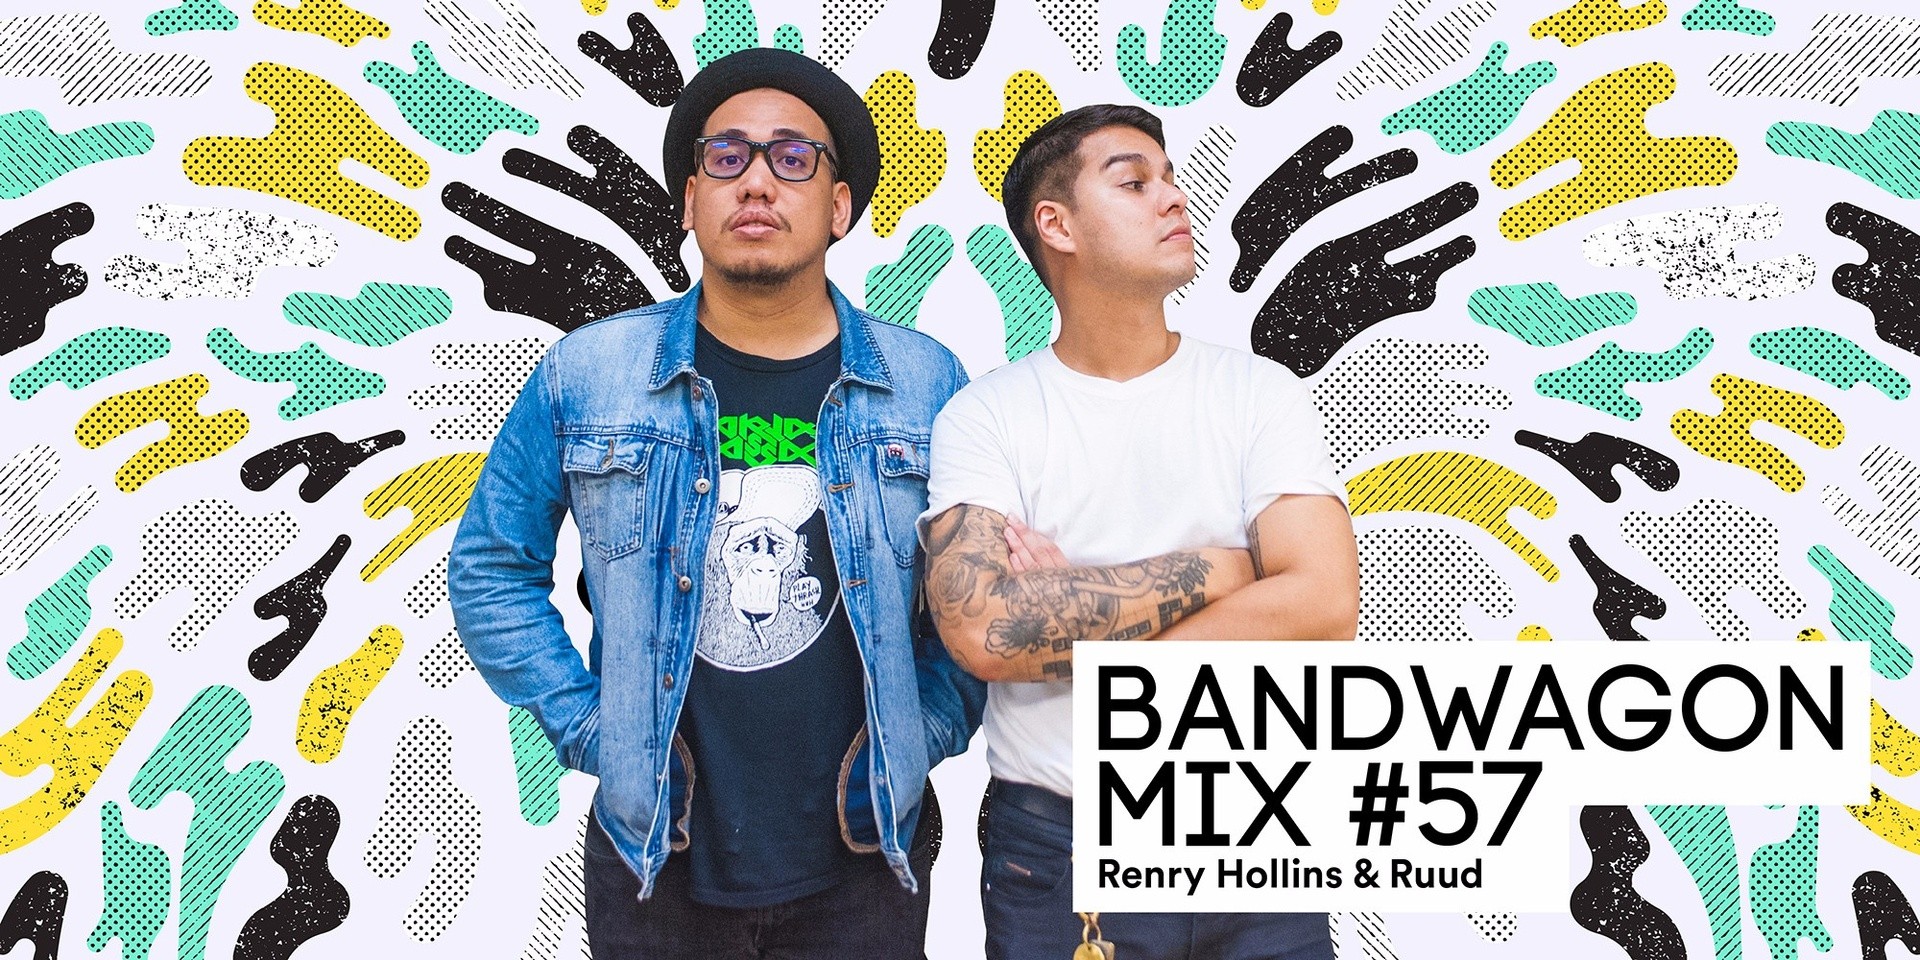 Bandwagon Mix #57: Renry Hollins & Ruud